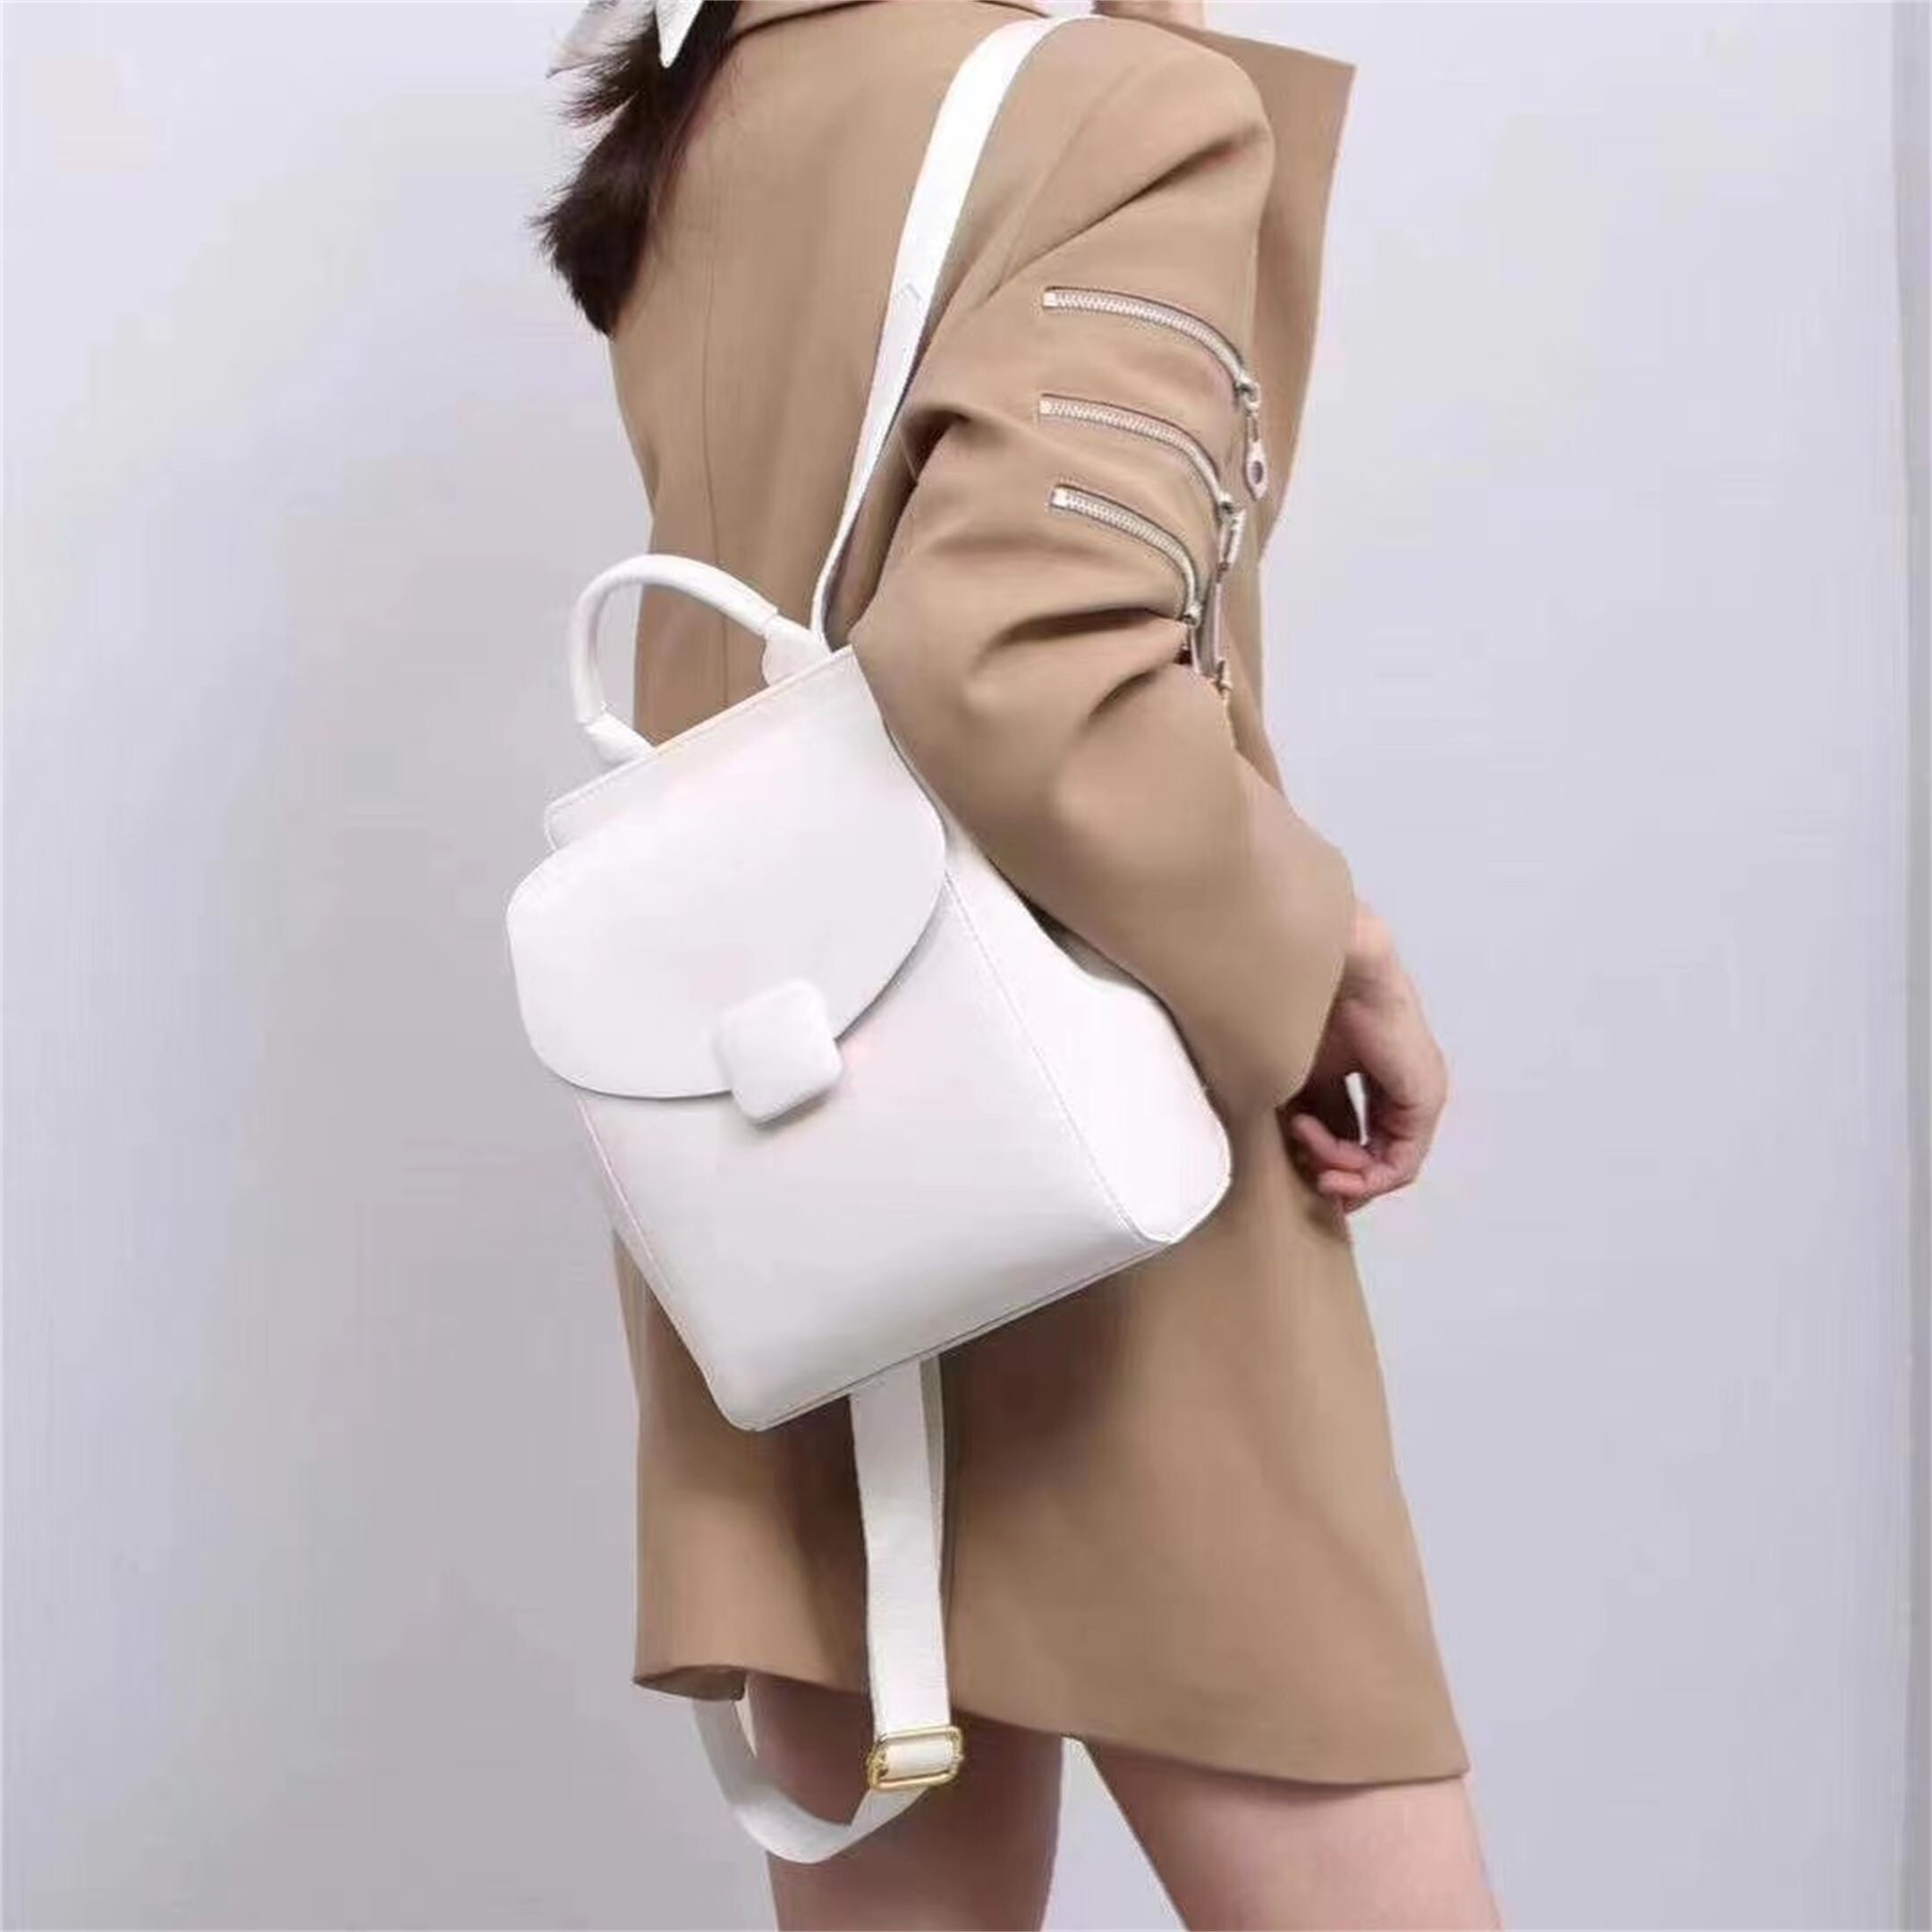 LYingDa Fashion Printed Women's Small Backpack Large Capacity